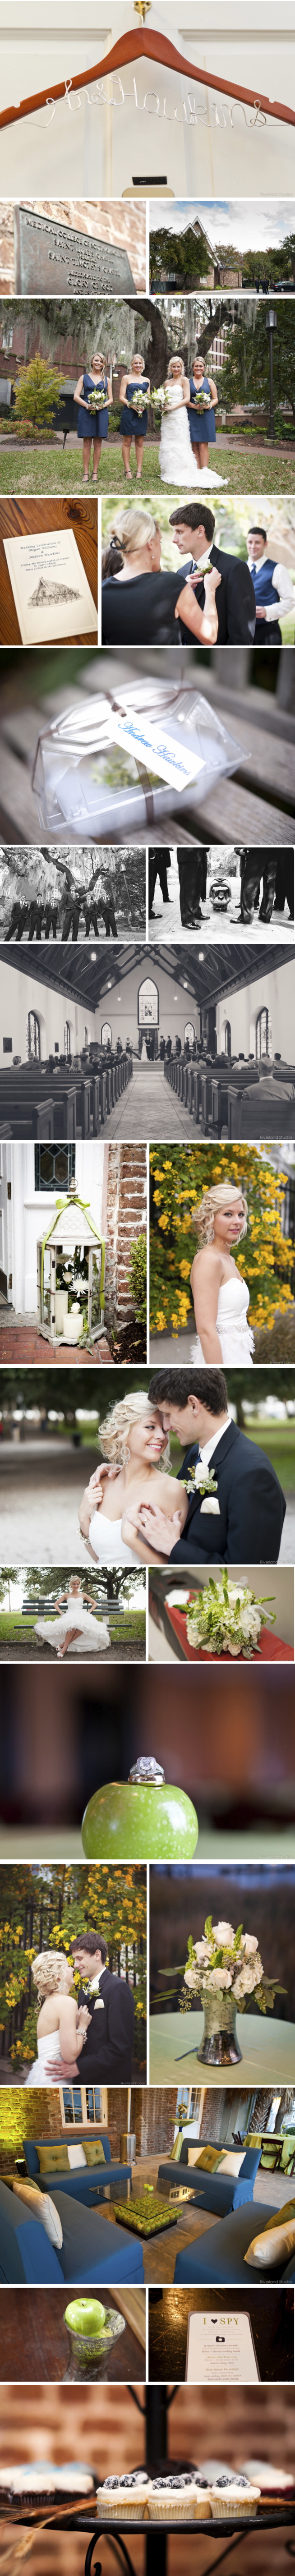 wedding blogs | wedding pictures